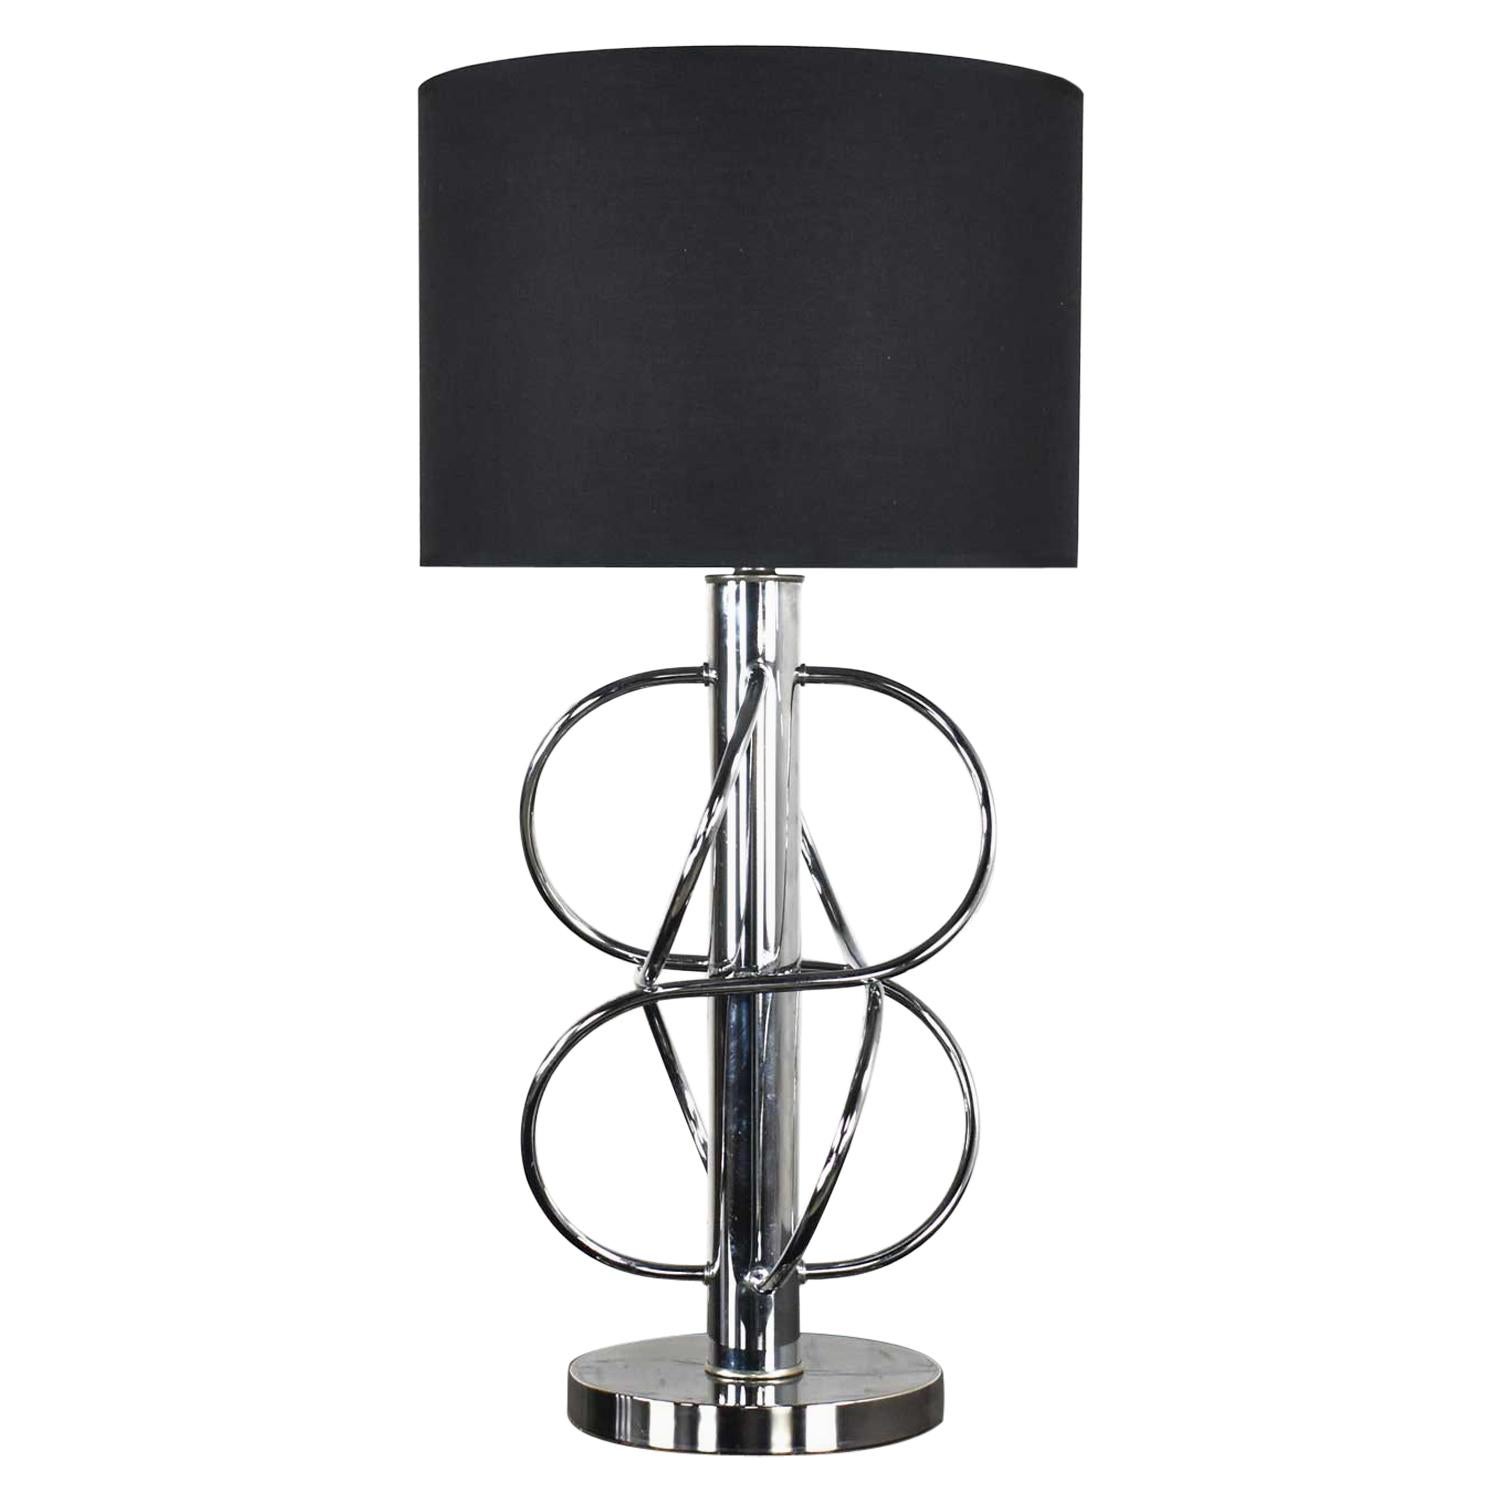 Vintage Mid-Century Modern Lampe de table en chrome poli New Black Drum Shade